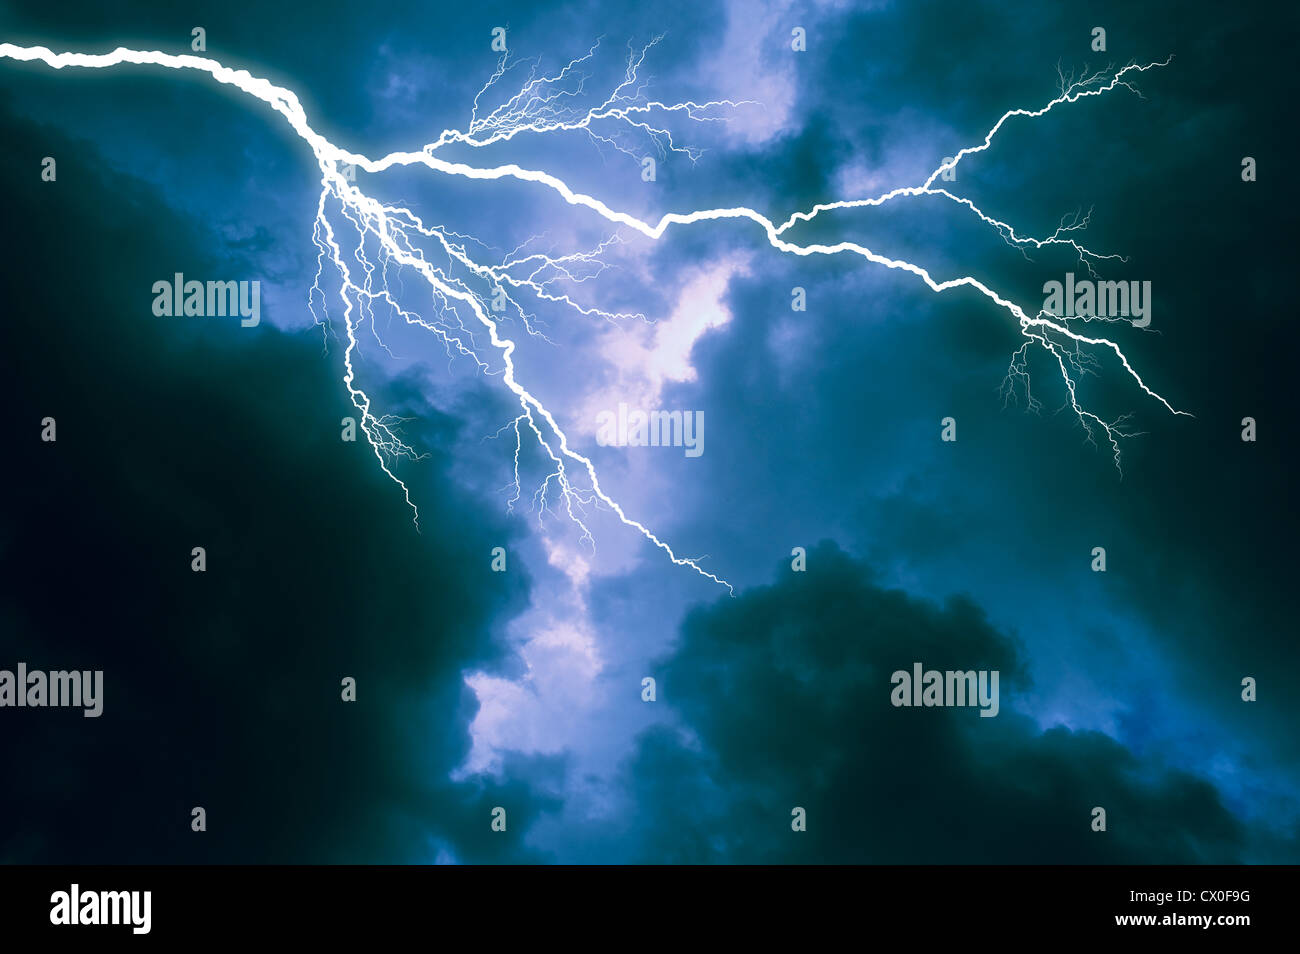 lightning bolt across dark storm clouds Stock Photo